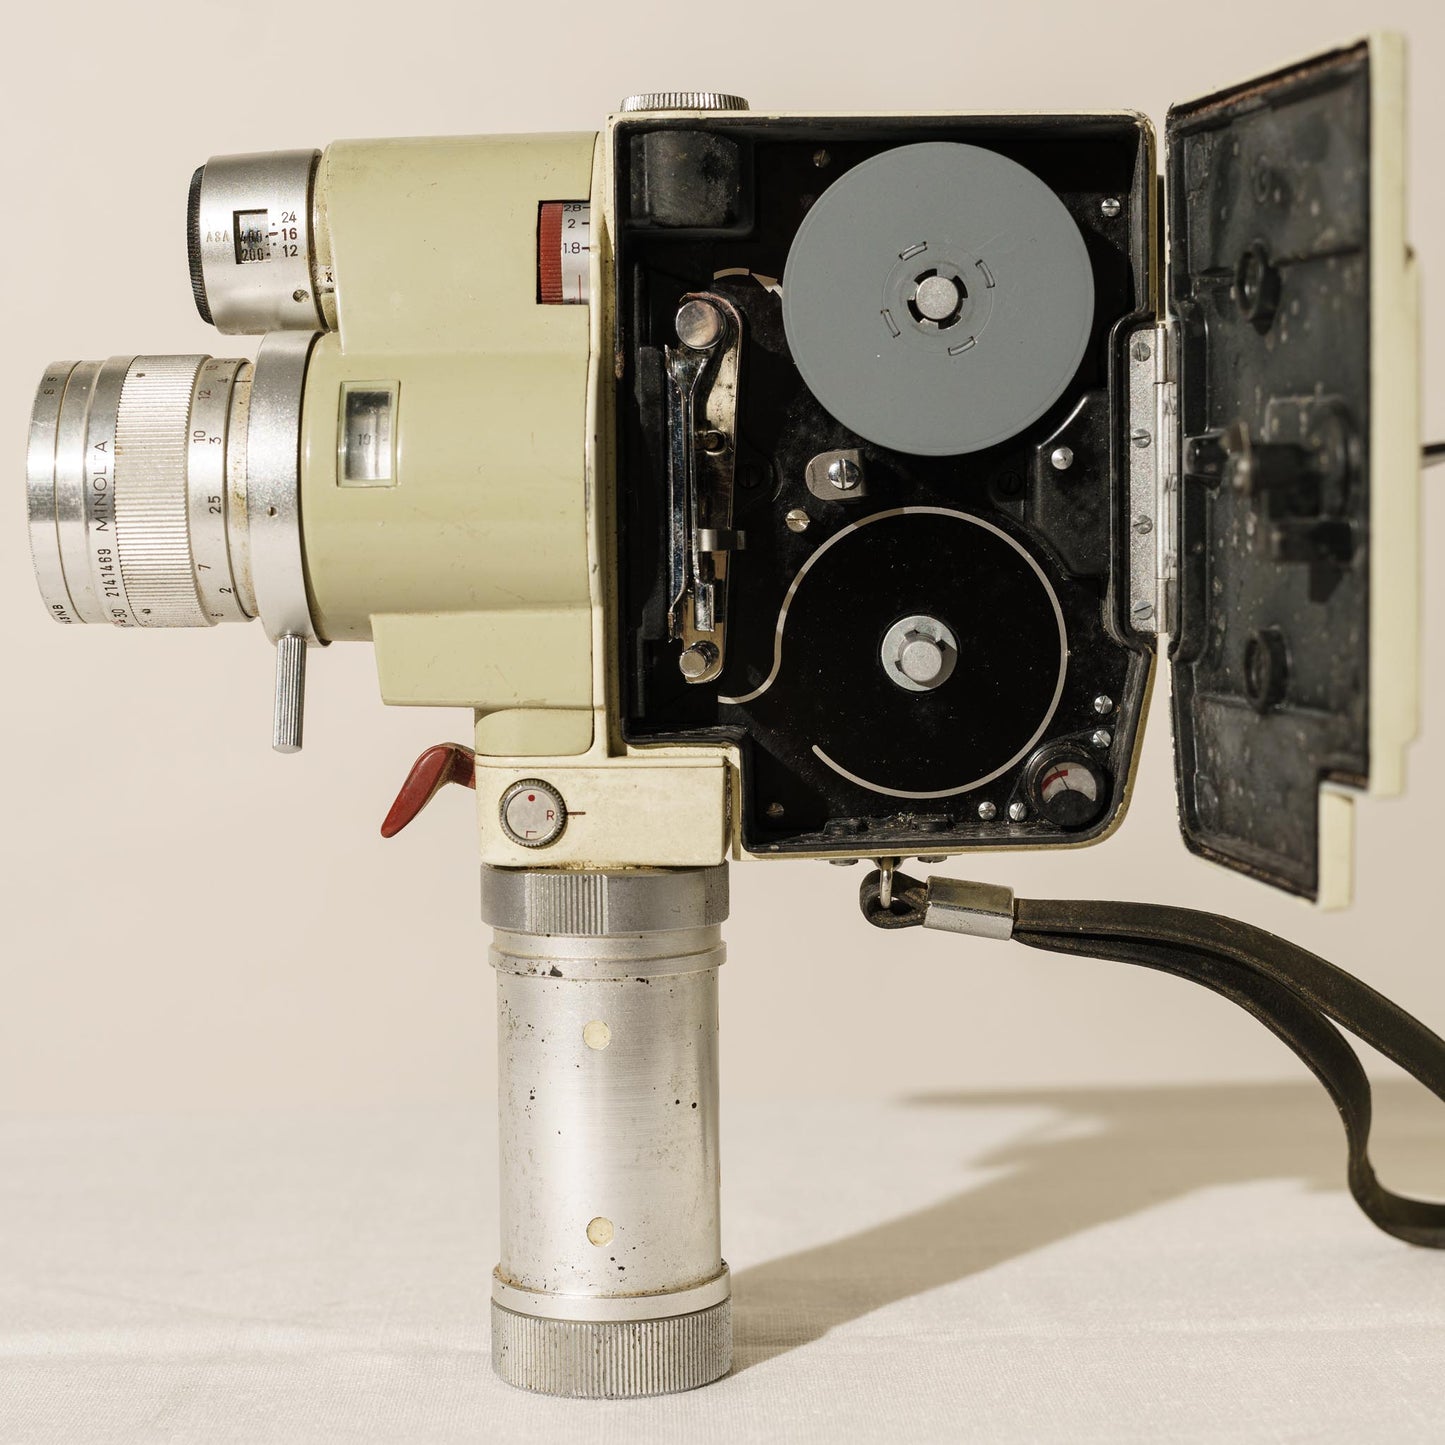 Minolta Zoom 8 Film Camera